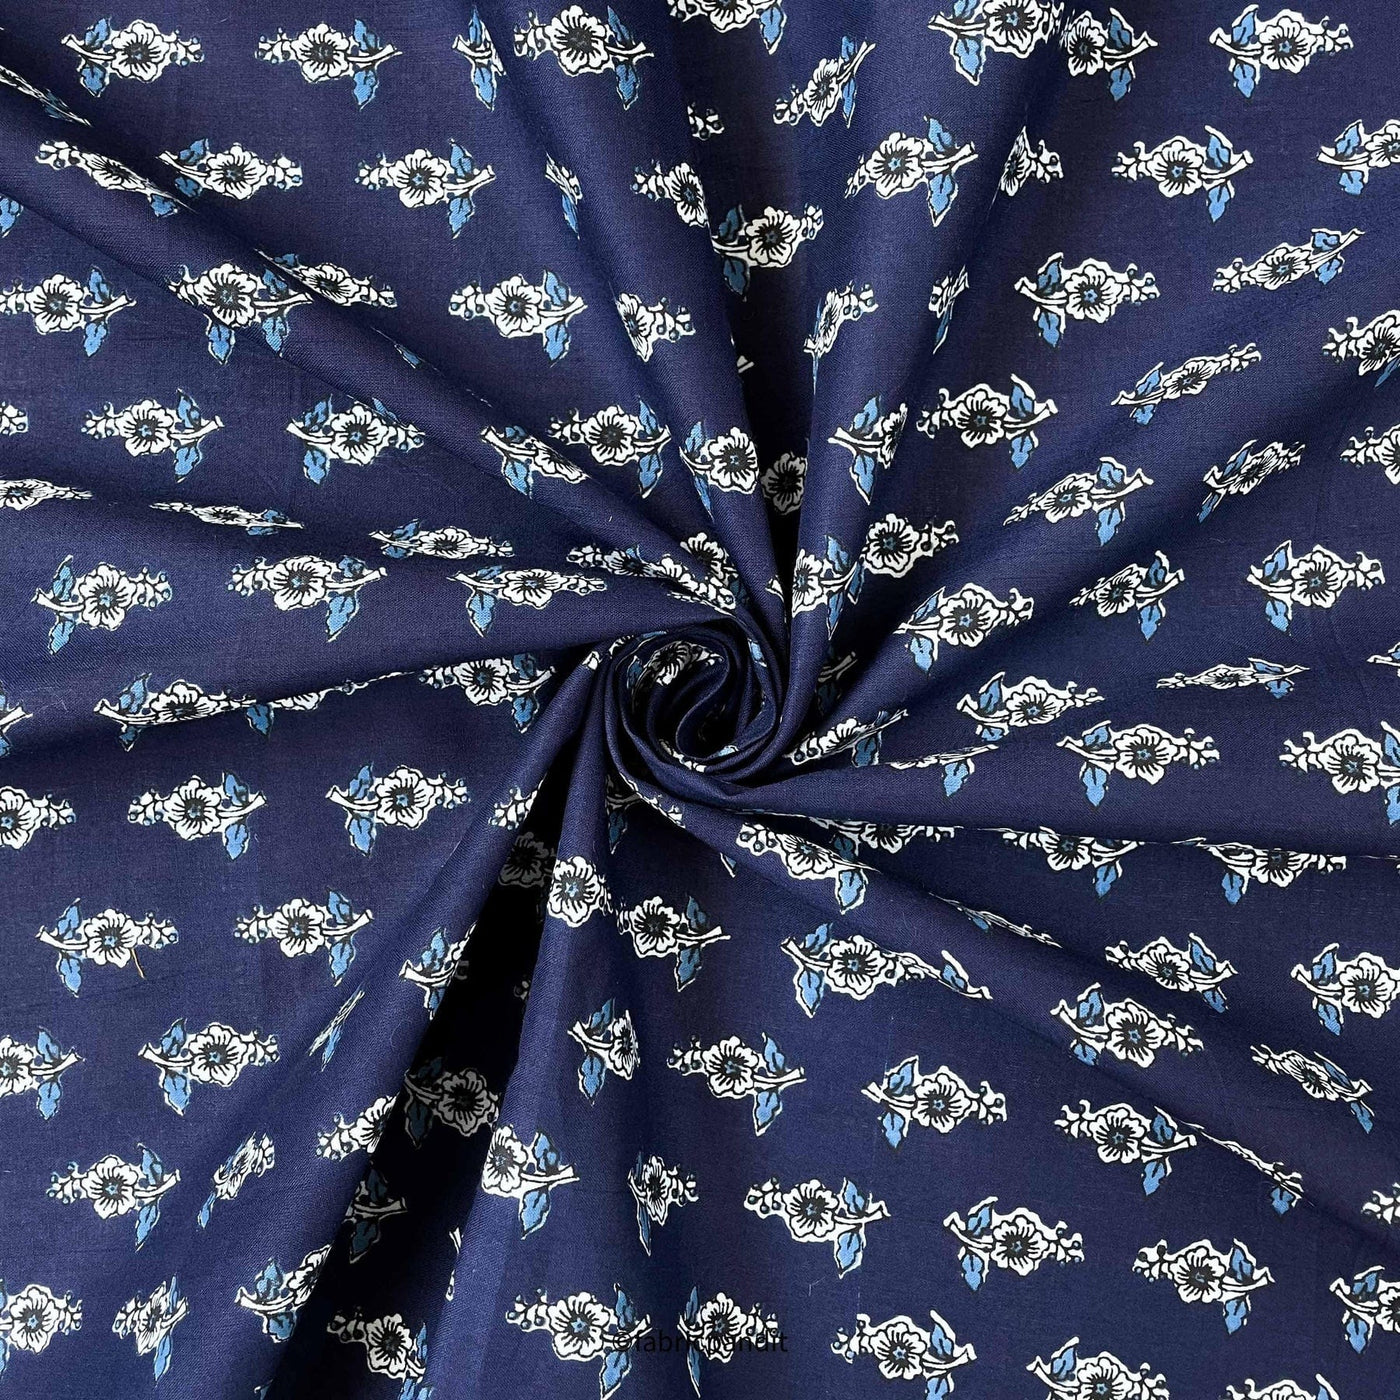 Bluey Pattern Digital Printed Fabric 100% Pure Cotton Cut By Yard/Meter 